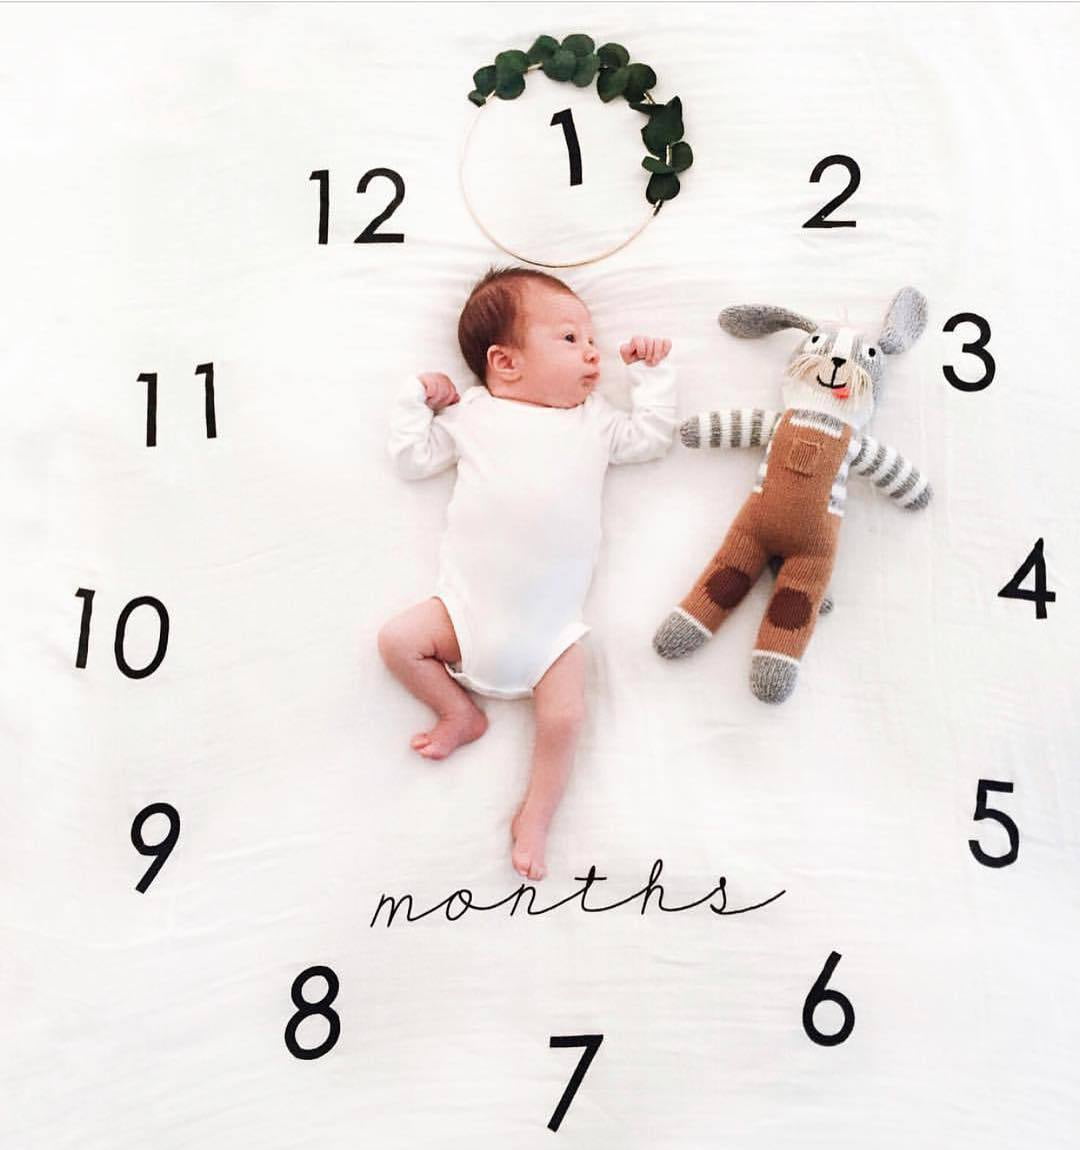 New Mom Baby Shower Gifts Baby Monthly Milestone BlanketNewborn Boy & Girl 